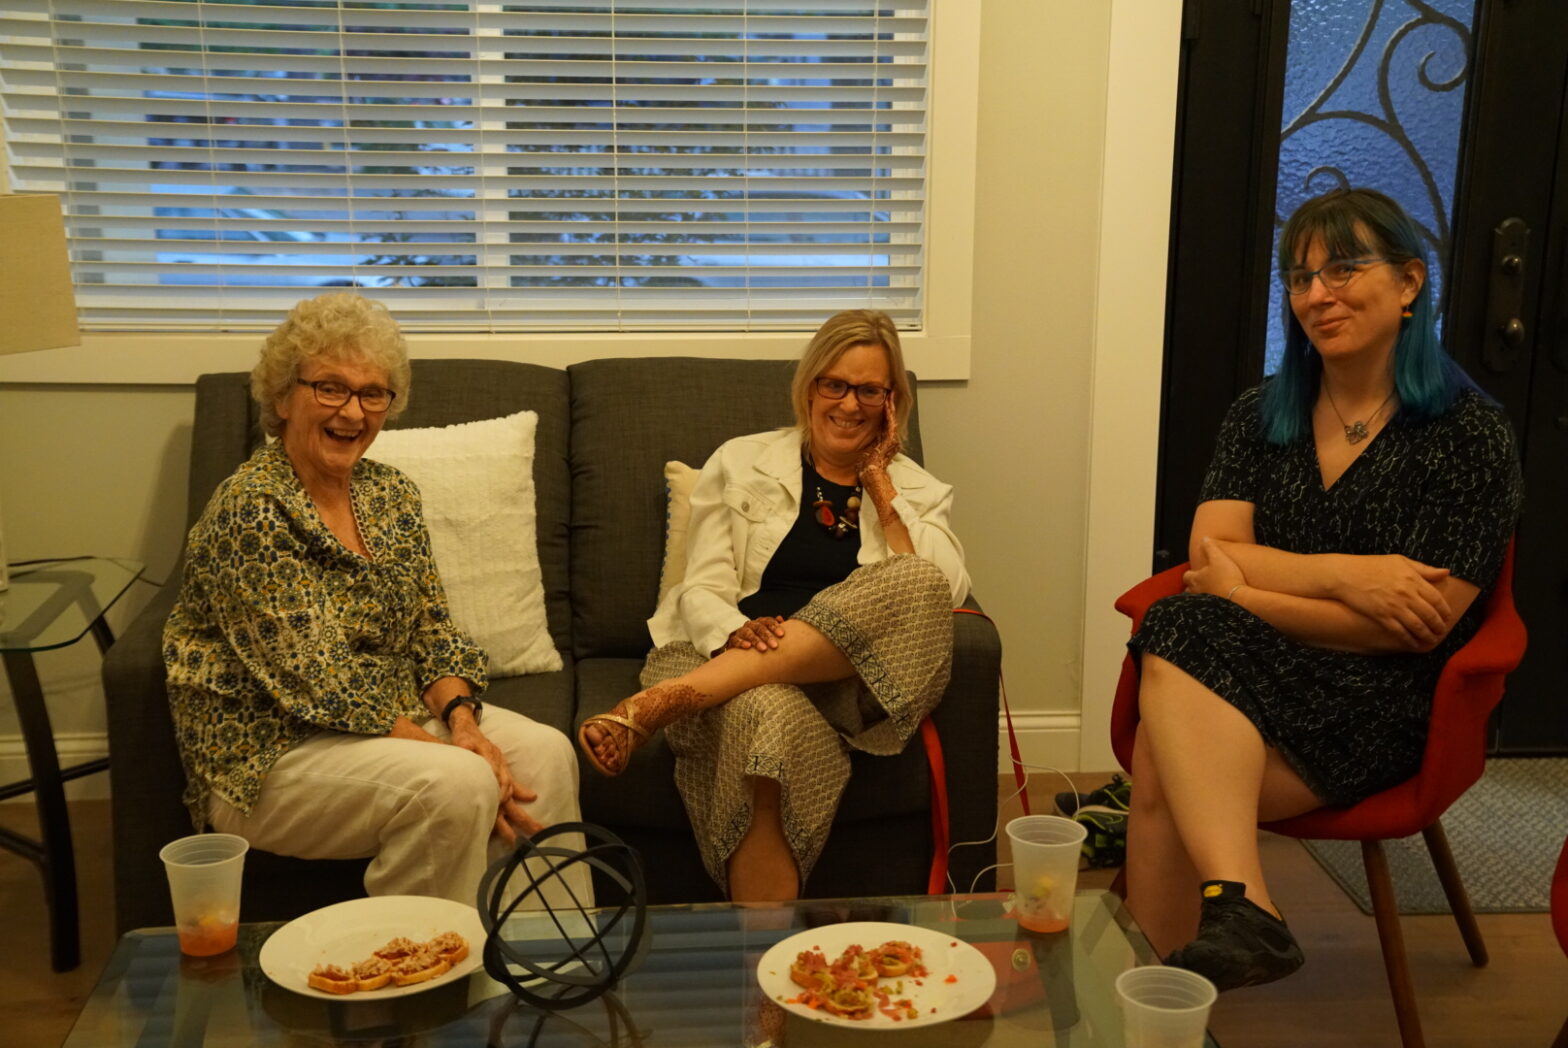 3 women in a living room